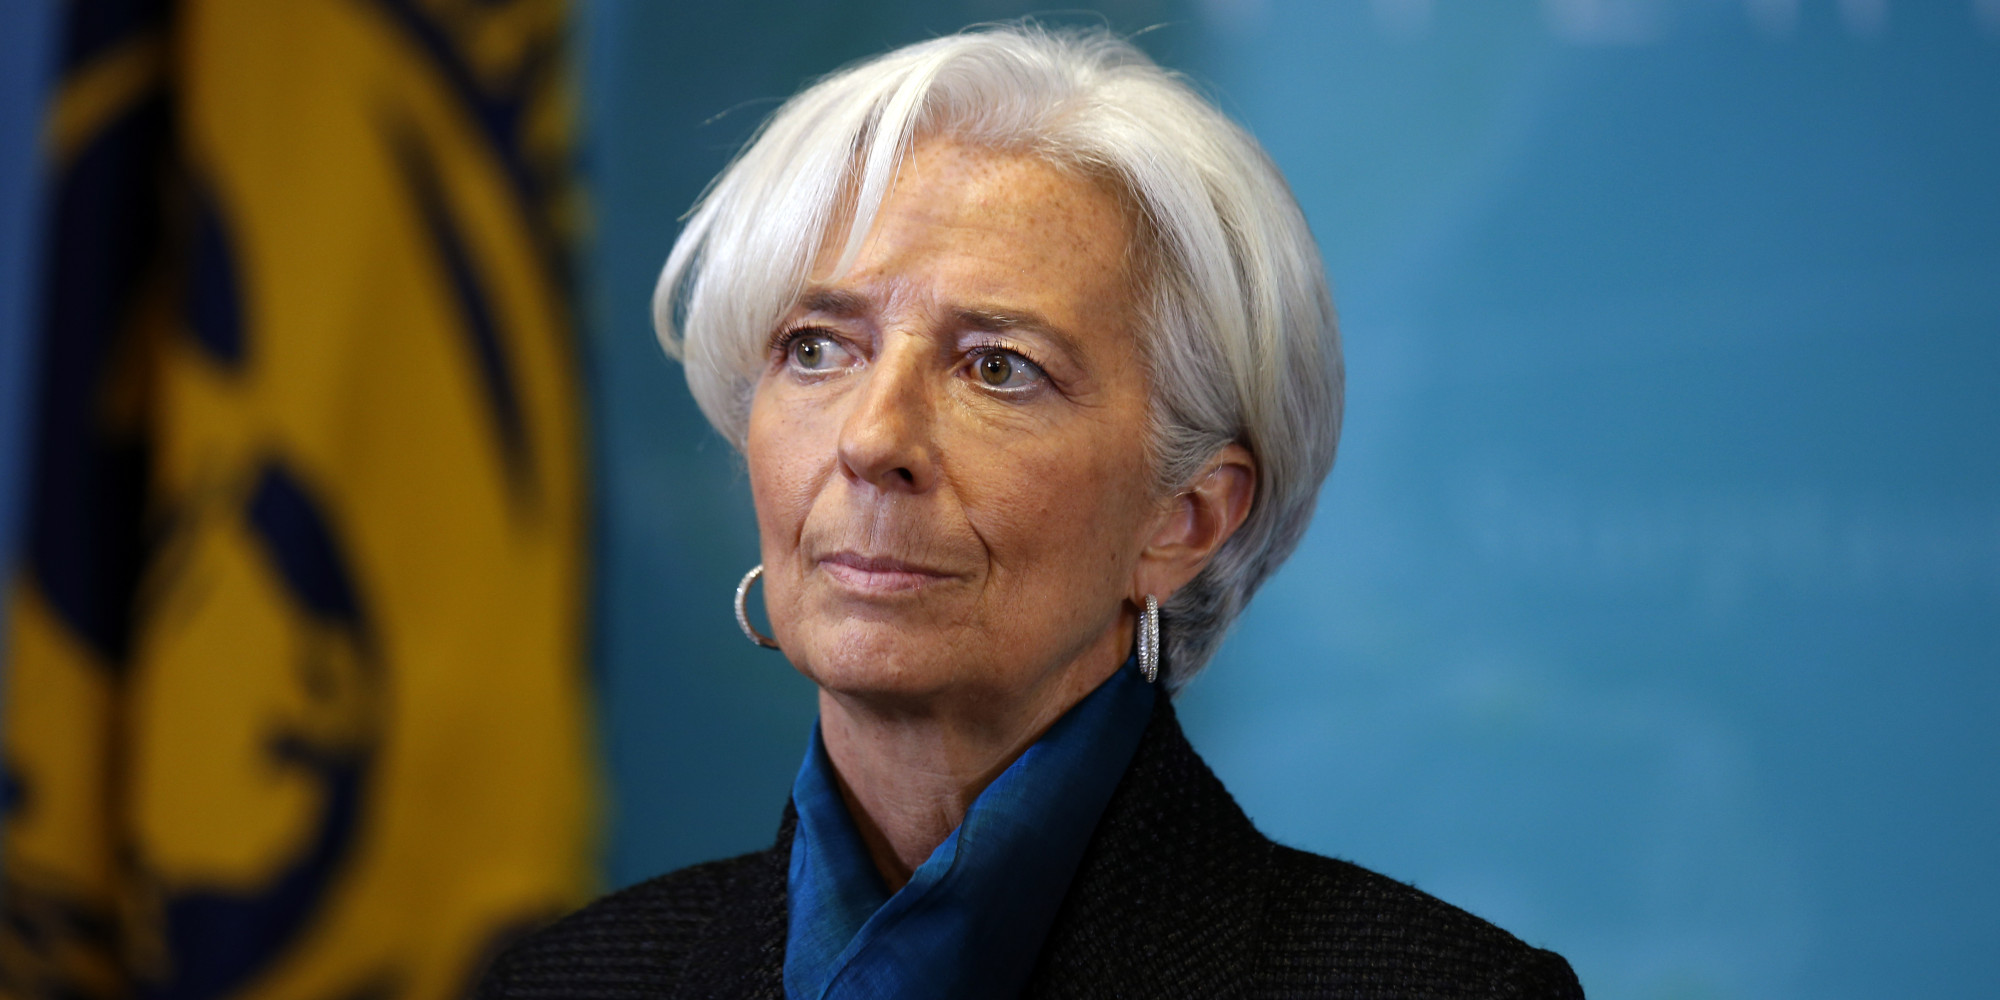 International Monetary Fund (IMF) Managing Director Christine Lagarde, waits to greet British Prime Minister David Cameron, before a round table meeting at the IMF, Thursday, Jan. 15, 2015 in Washington. (AP Photo/Alex Brandon)